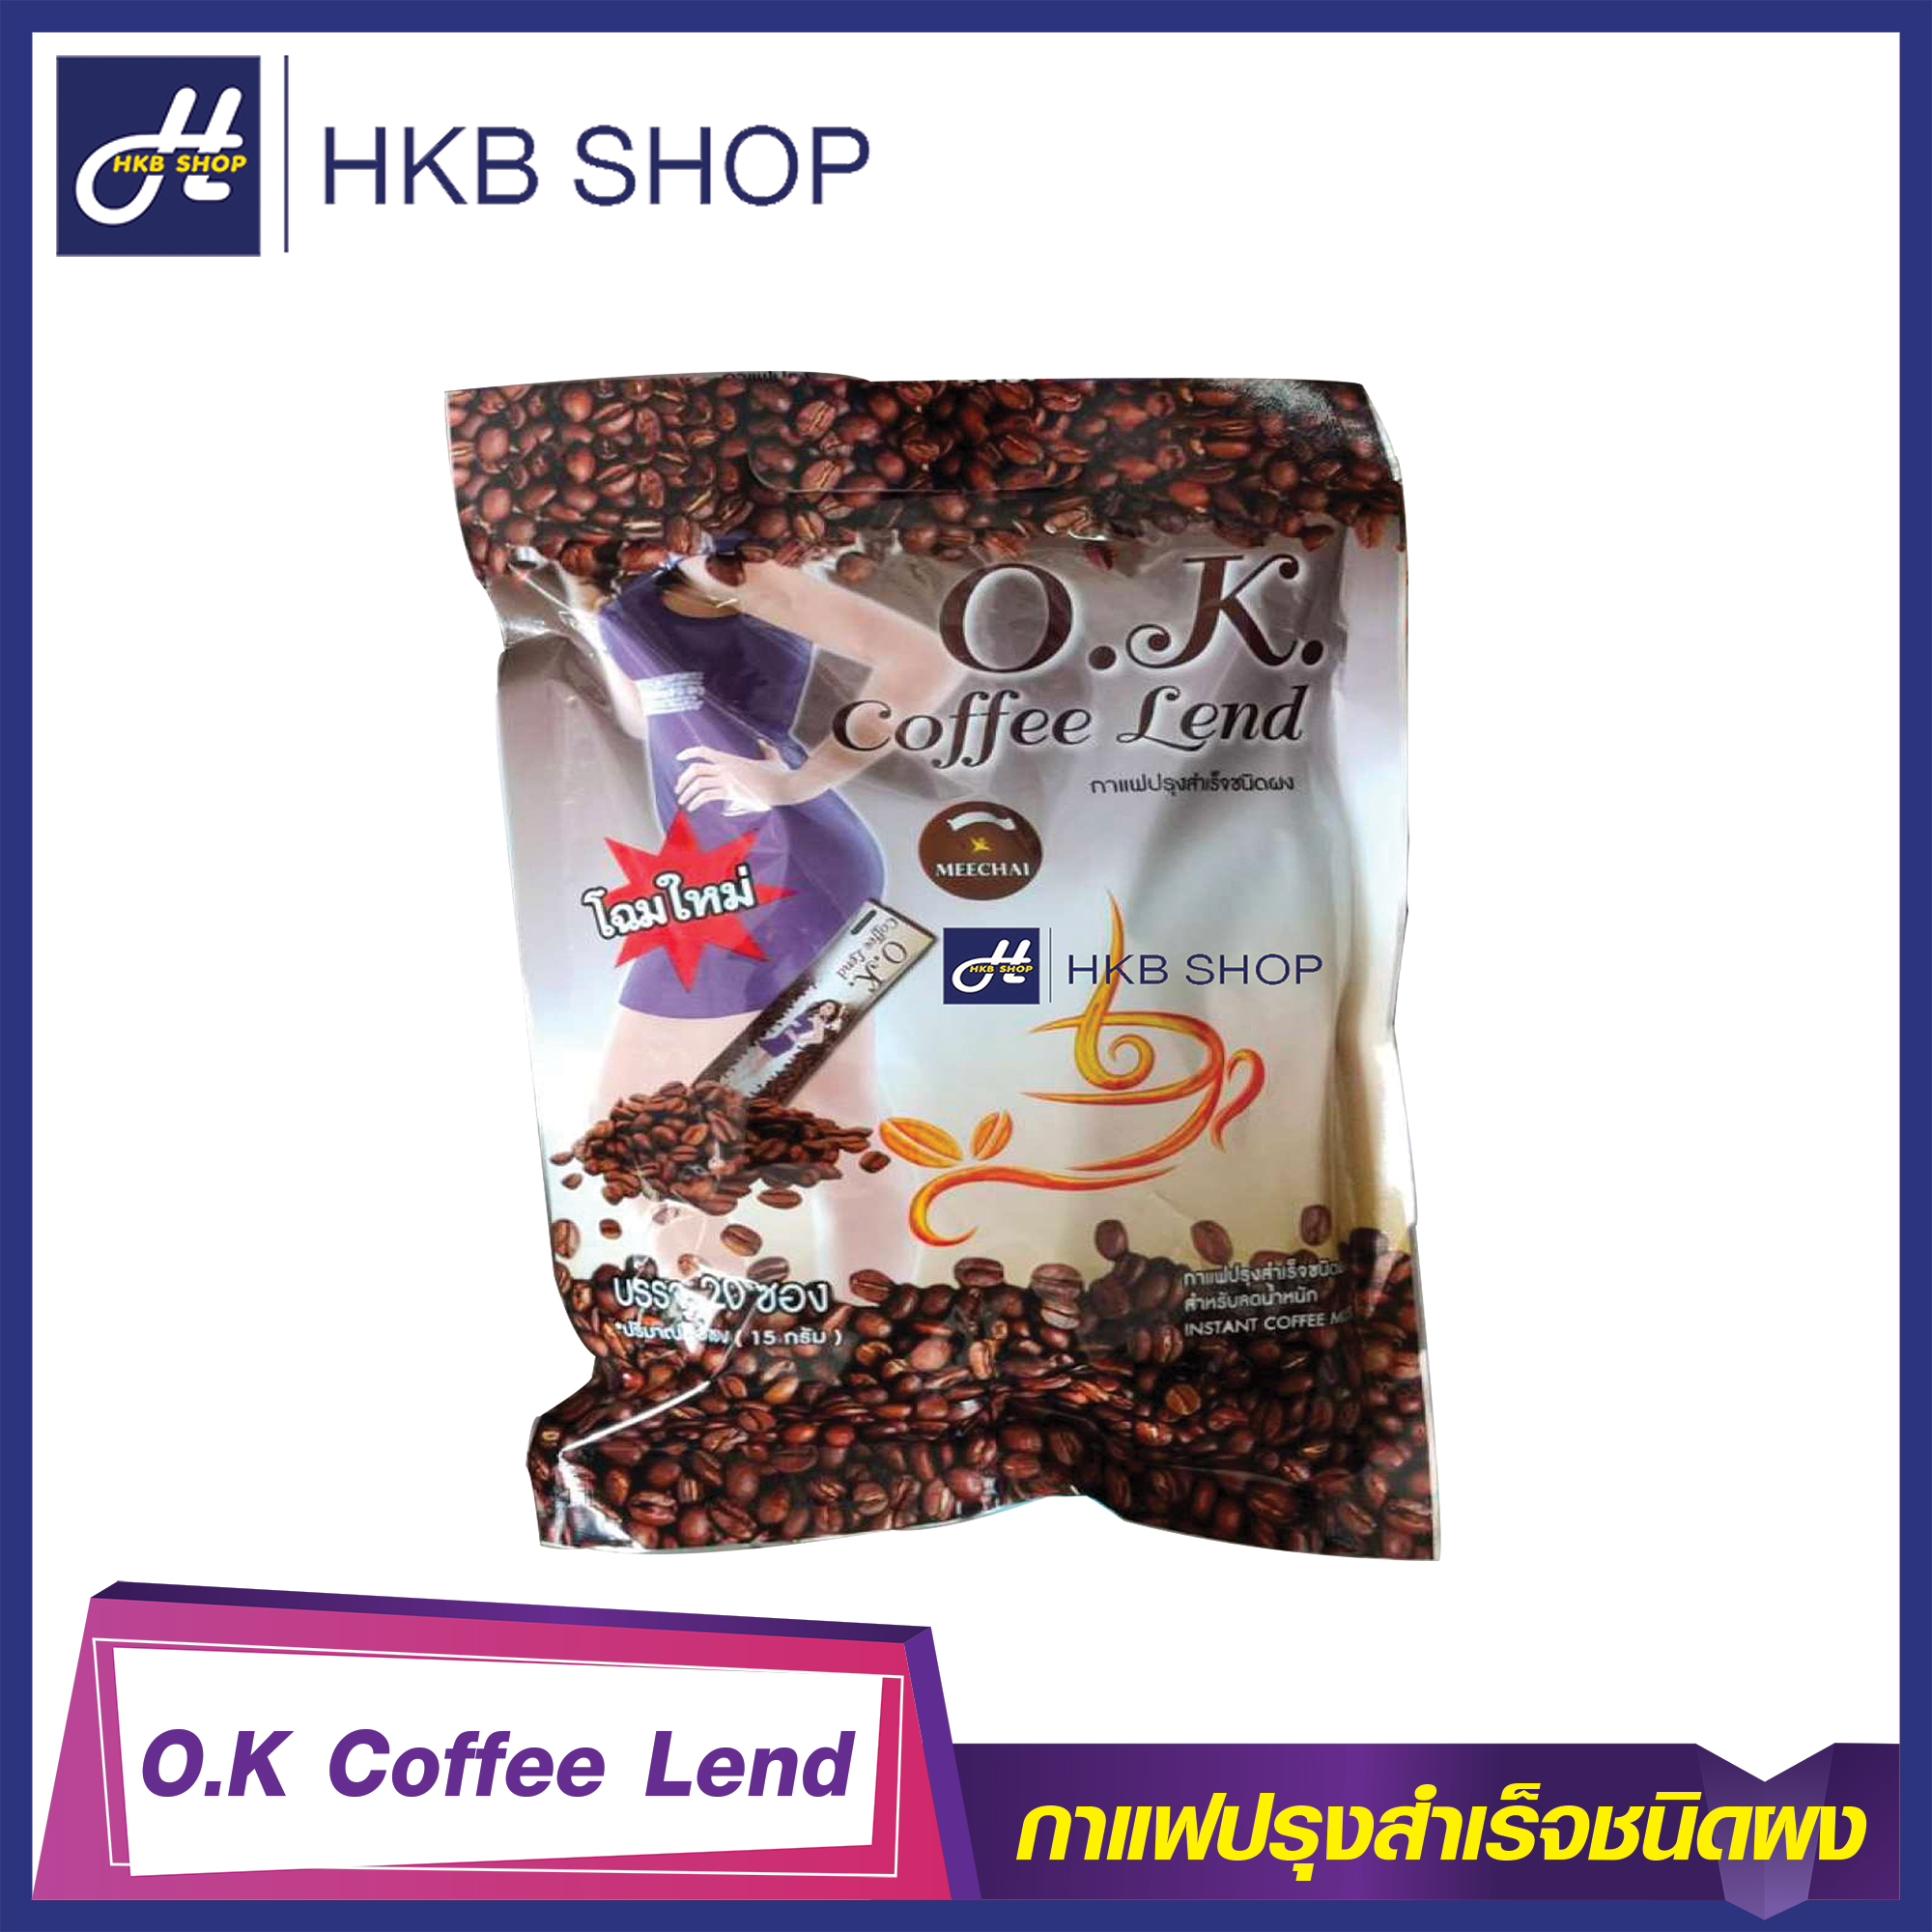 ⚡️1ห่อ⚡️ O.K. Coffee Lend โอเค คอฟฟี่ เลนด์ กาแฟปรุงสำเร็จชนิดผง By HKB SHOP